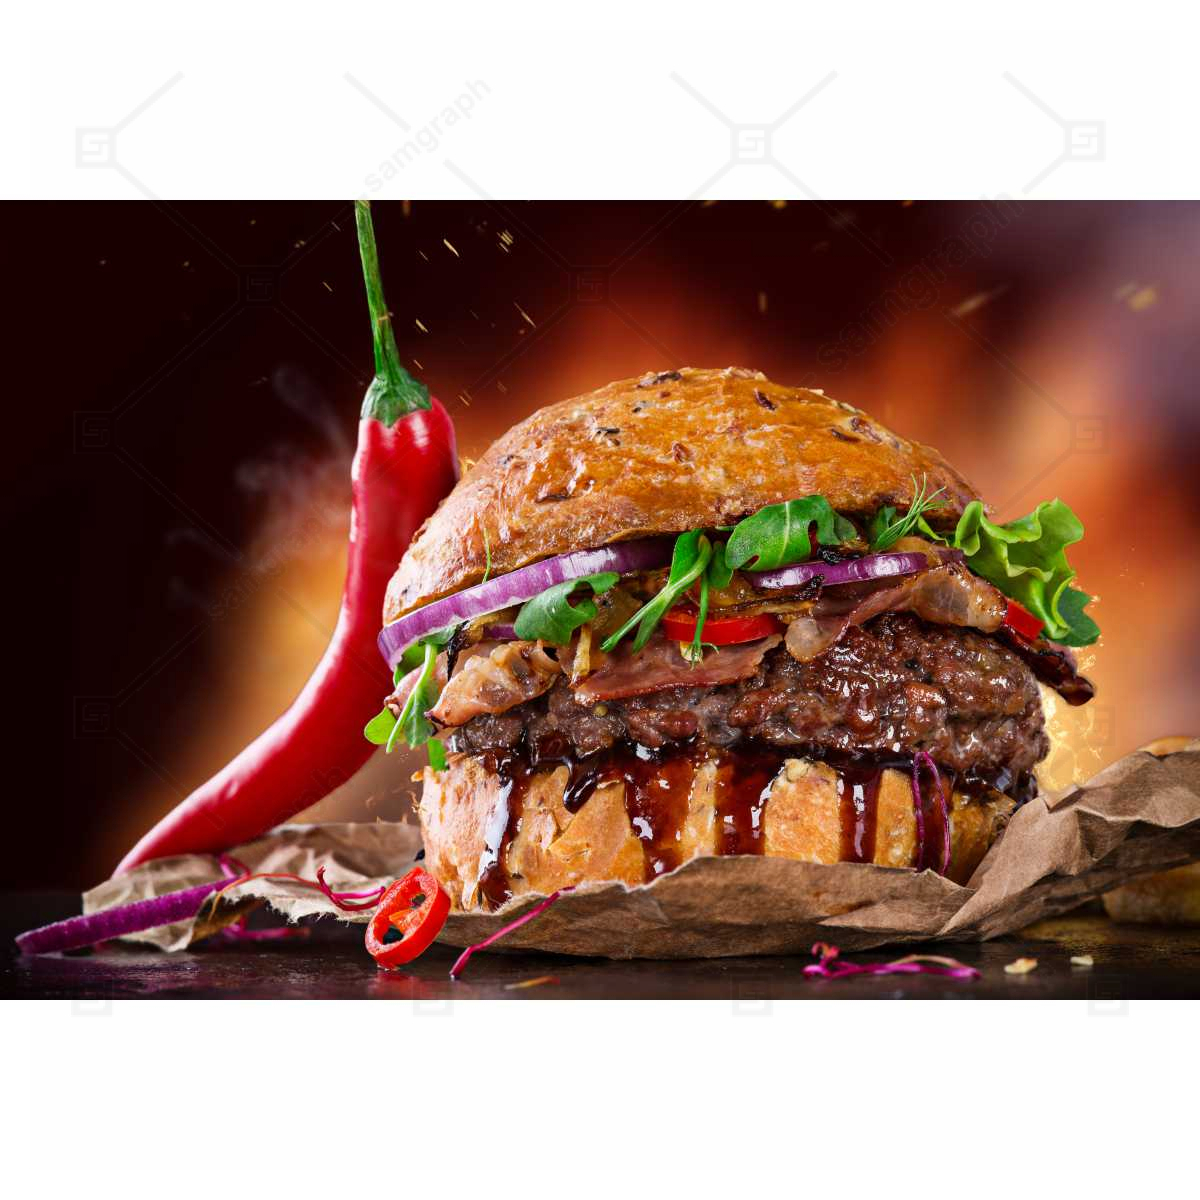 High quality photo of juicy hamburger with fire and pepper lettuce onion parsley 1 عکس با کیفیت همبرگر آبدار با زمینه آتش و فلفل کاهو پیاز جعفری